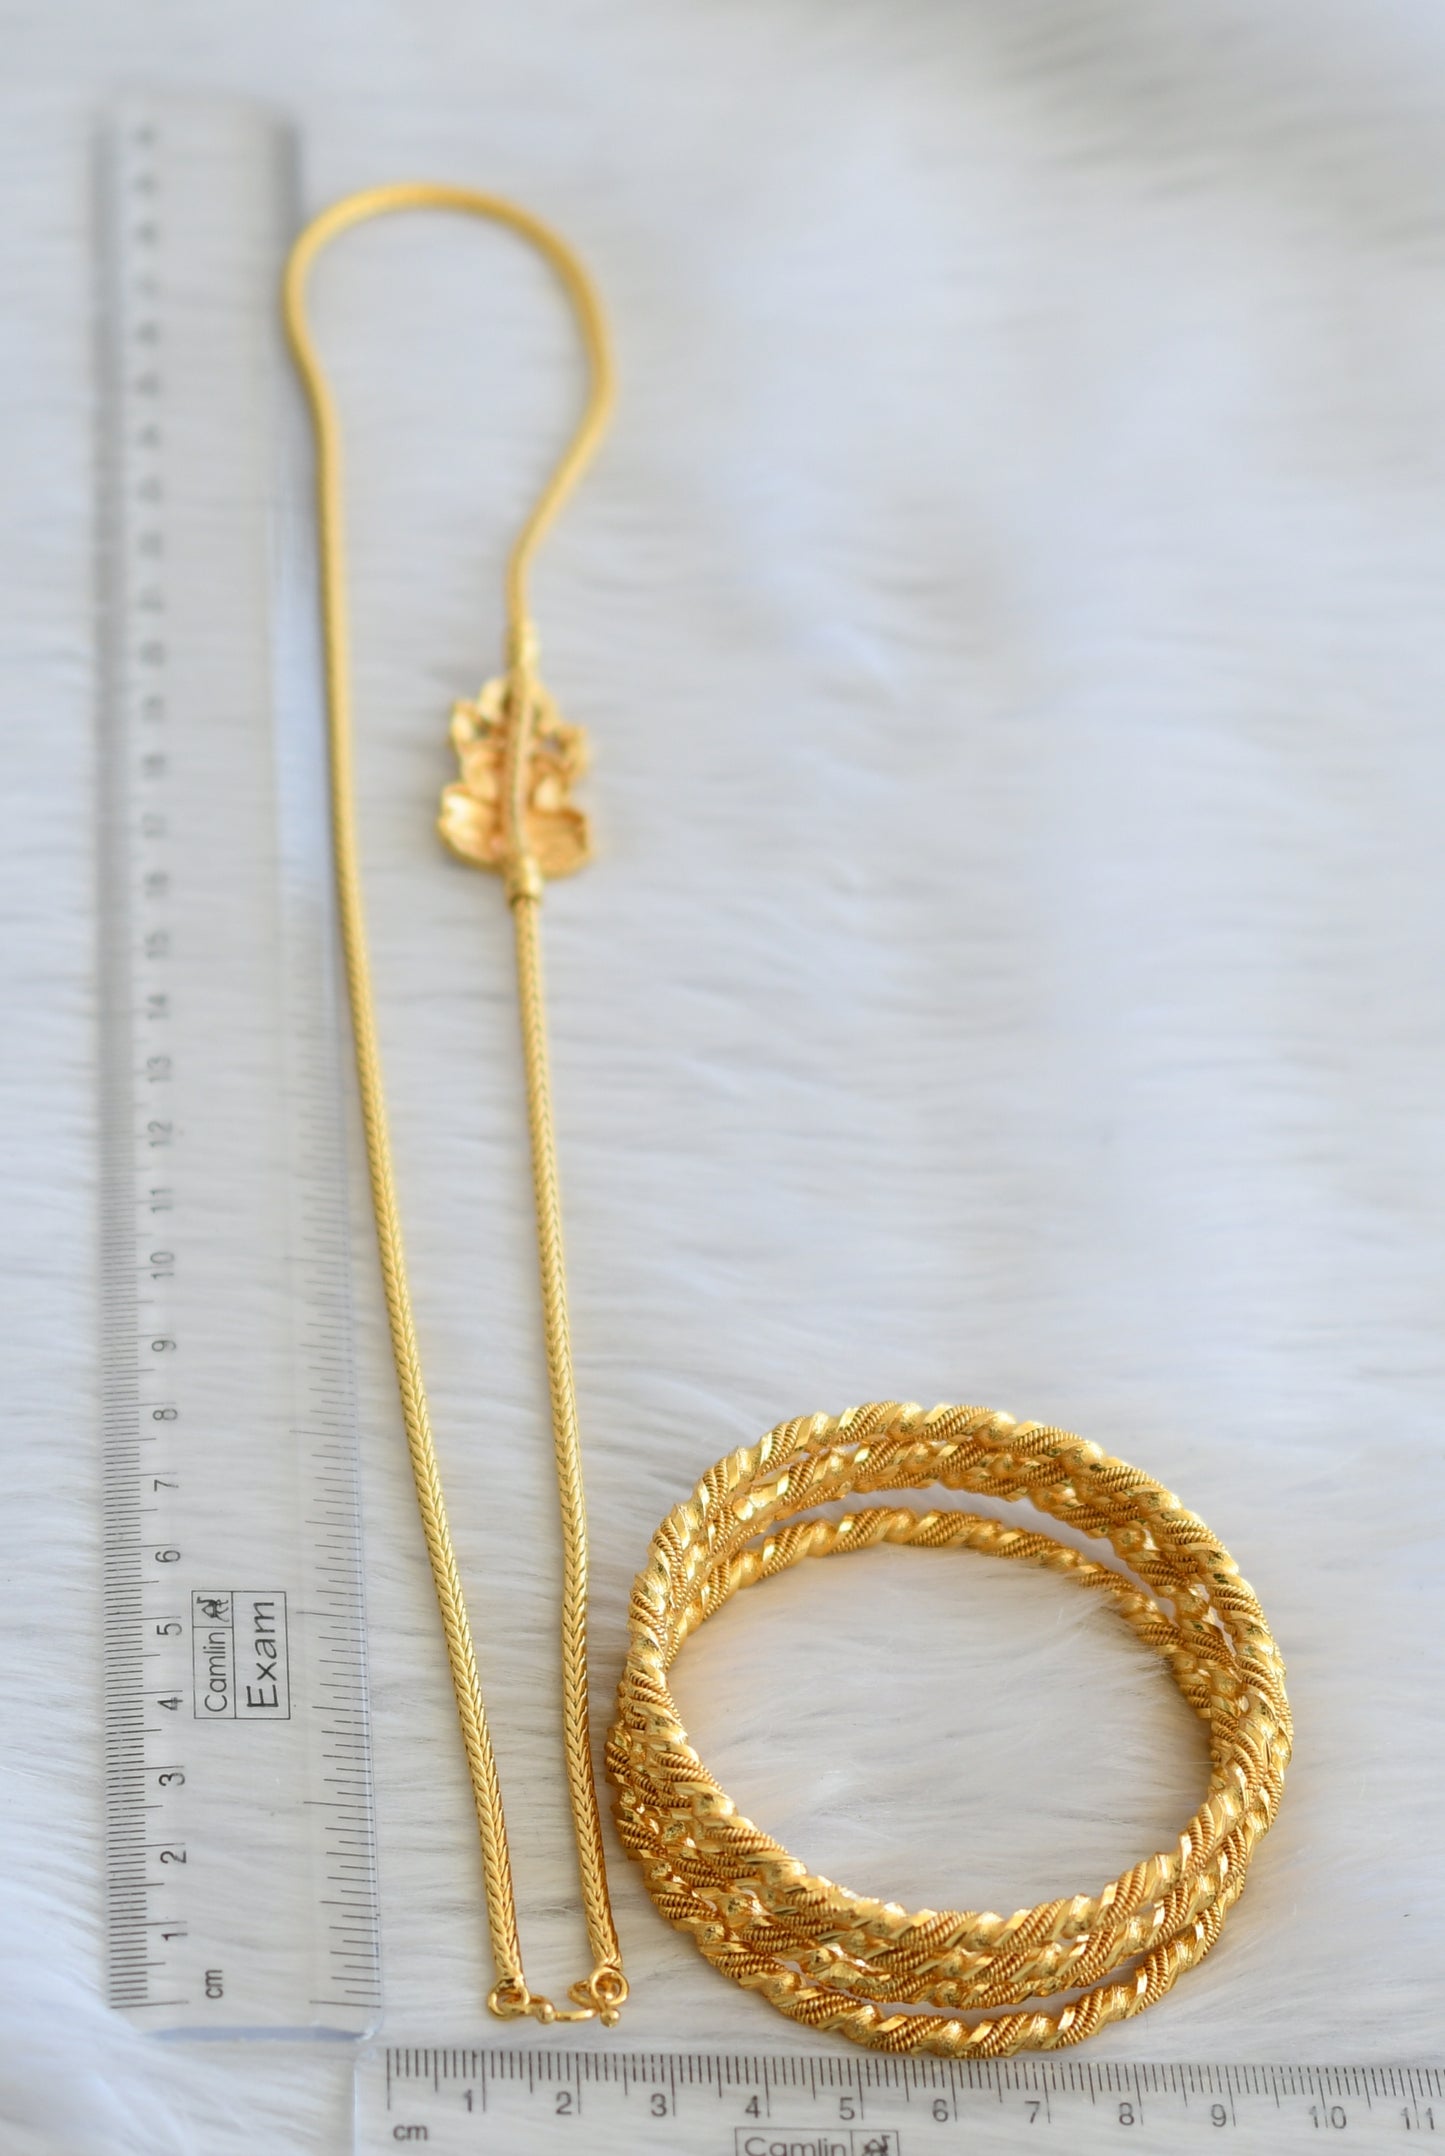 Gold tone 24 inches lakshmi mugappu chain with set of 4 bangles(2.8) dj-45619